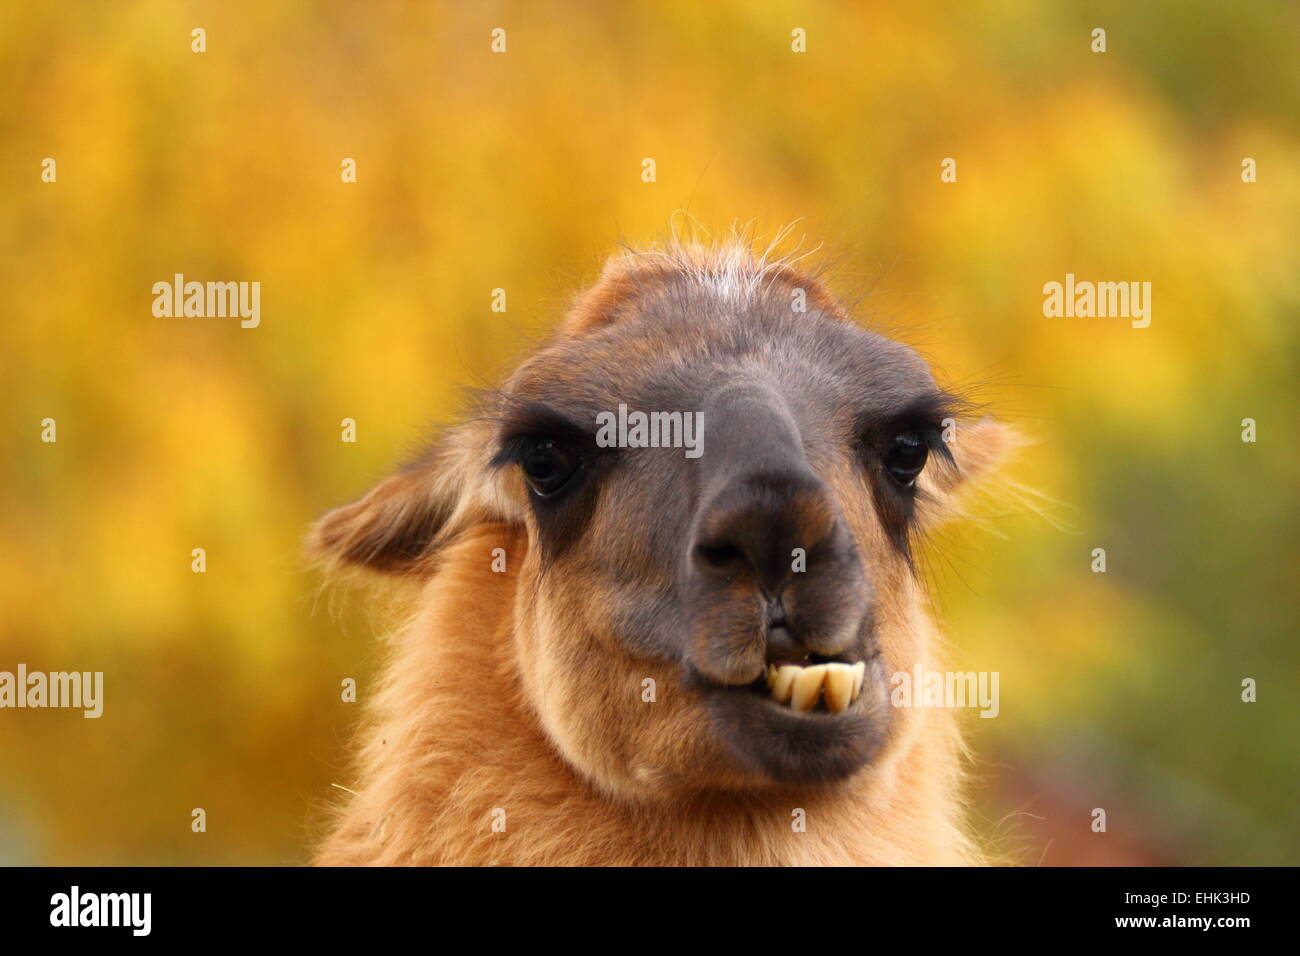 funny spitting llama portrait shoving its teeth over autumn background Stock Photo